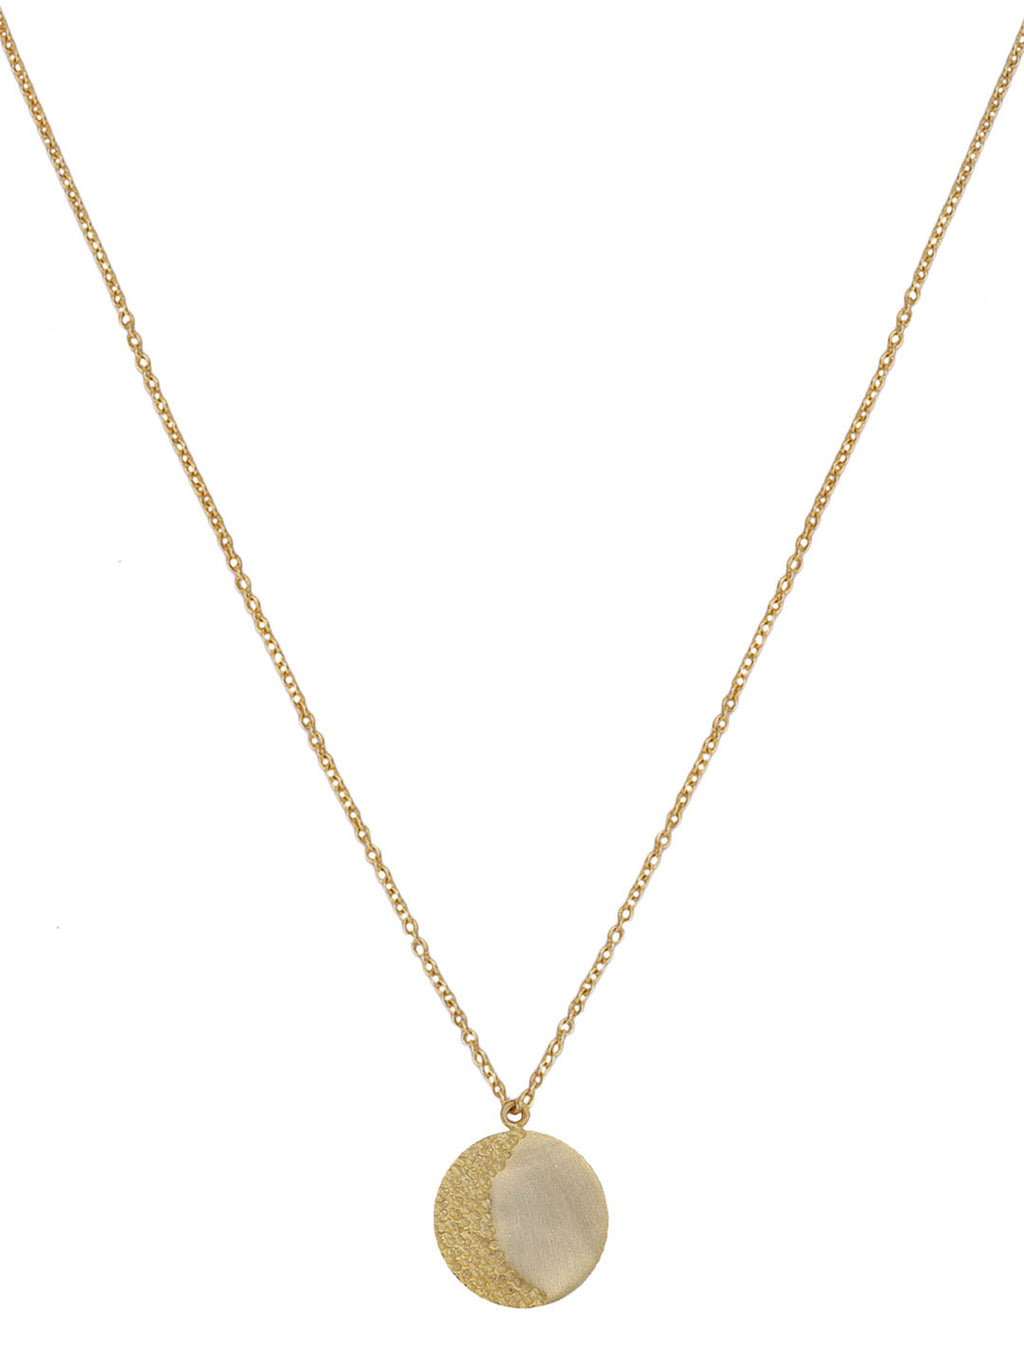 Gold Plated Textured Halfmoon Necklace, Neckpiece - Shopberserk